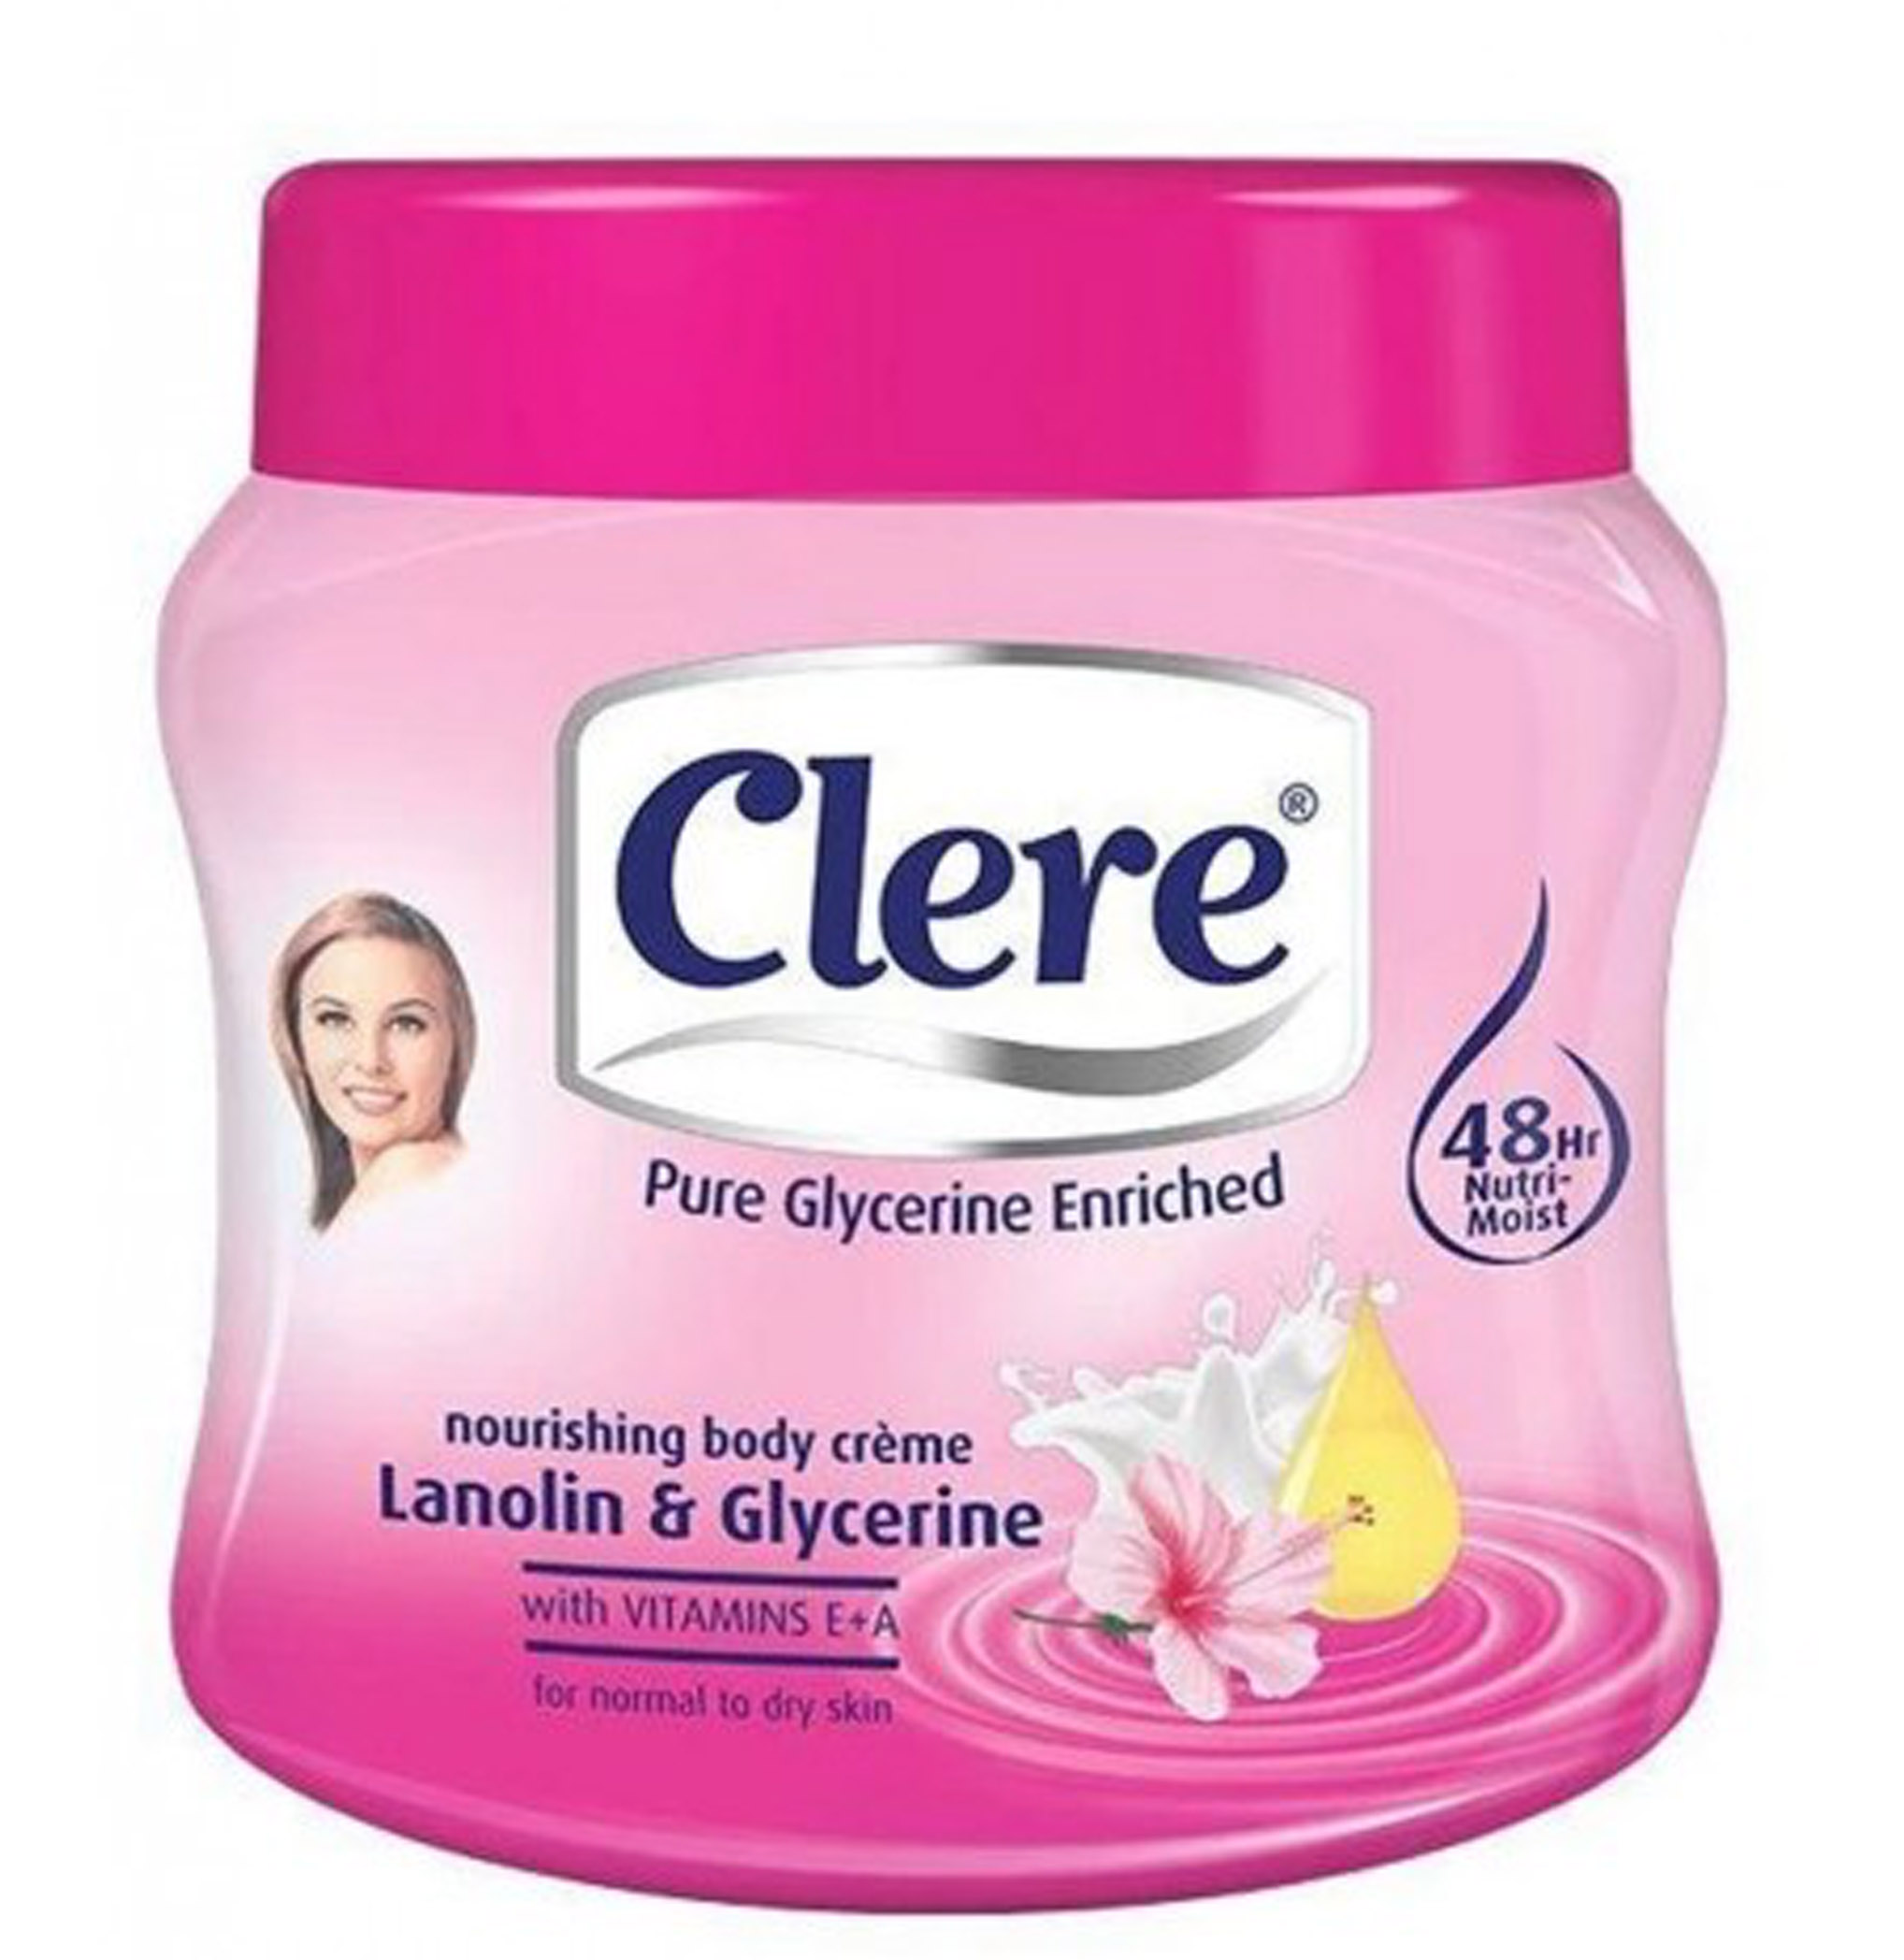 Clere Nourishing Lanolin and Glycerine body crème